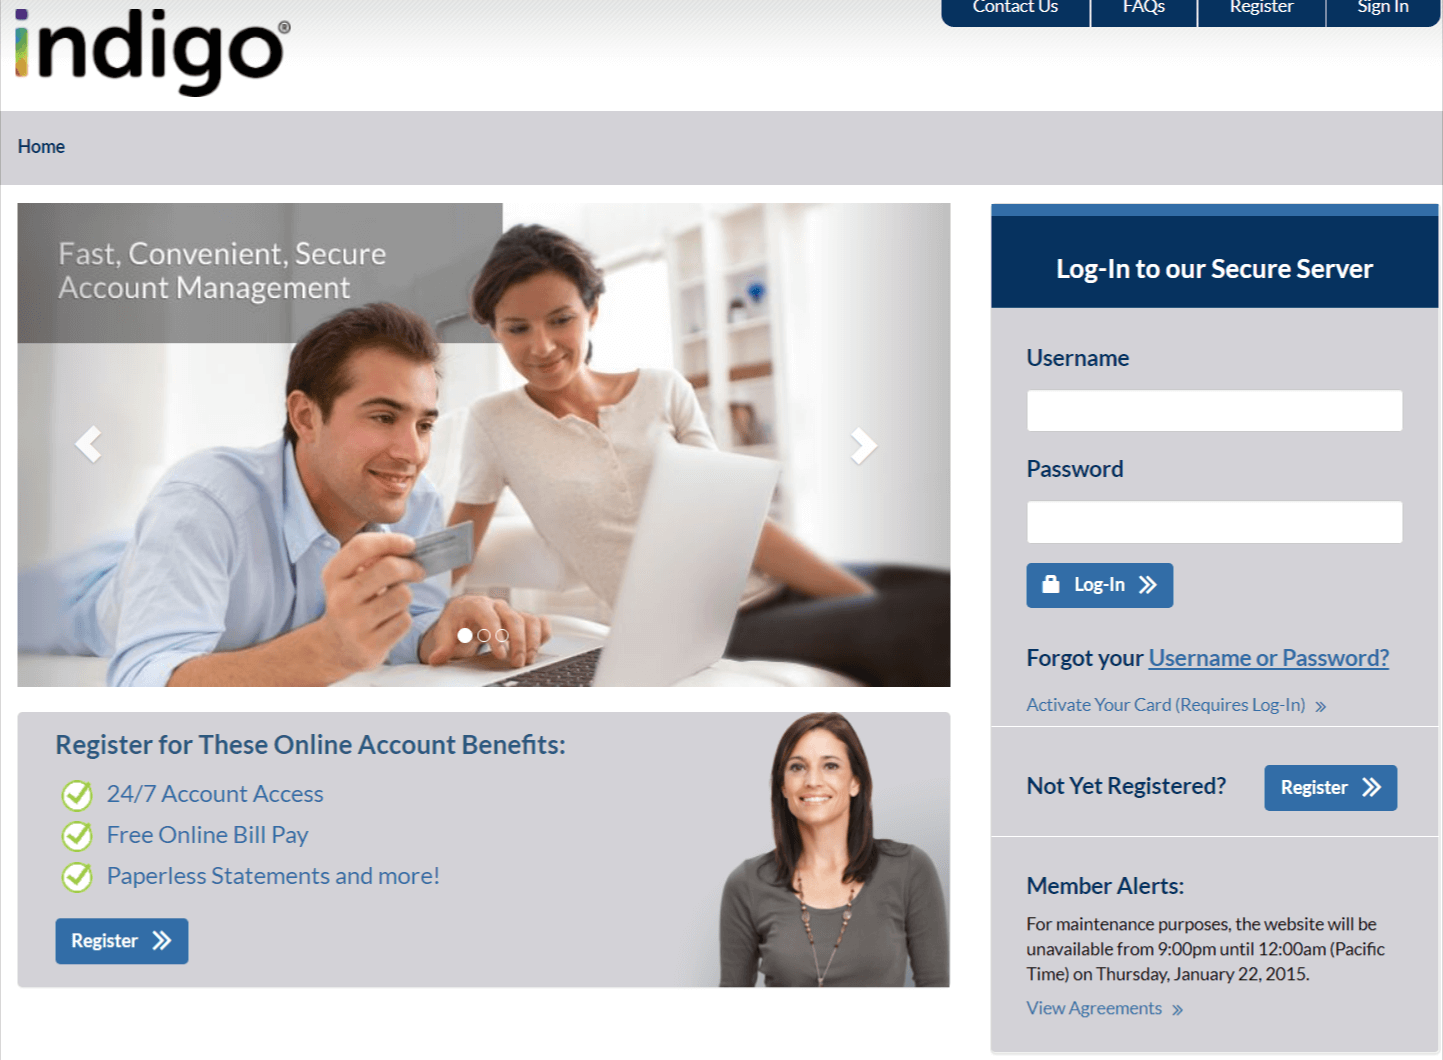 MyIndigoCard - My Indigo Credit Card Login, Registration, Activation